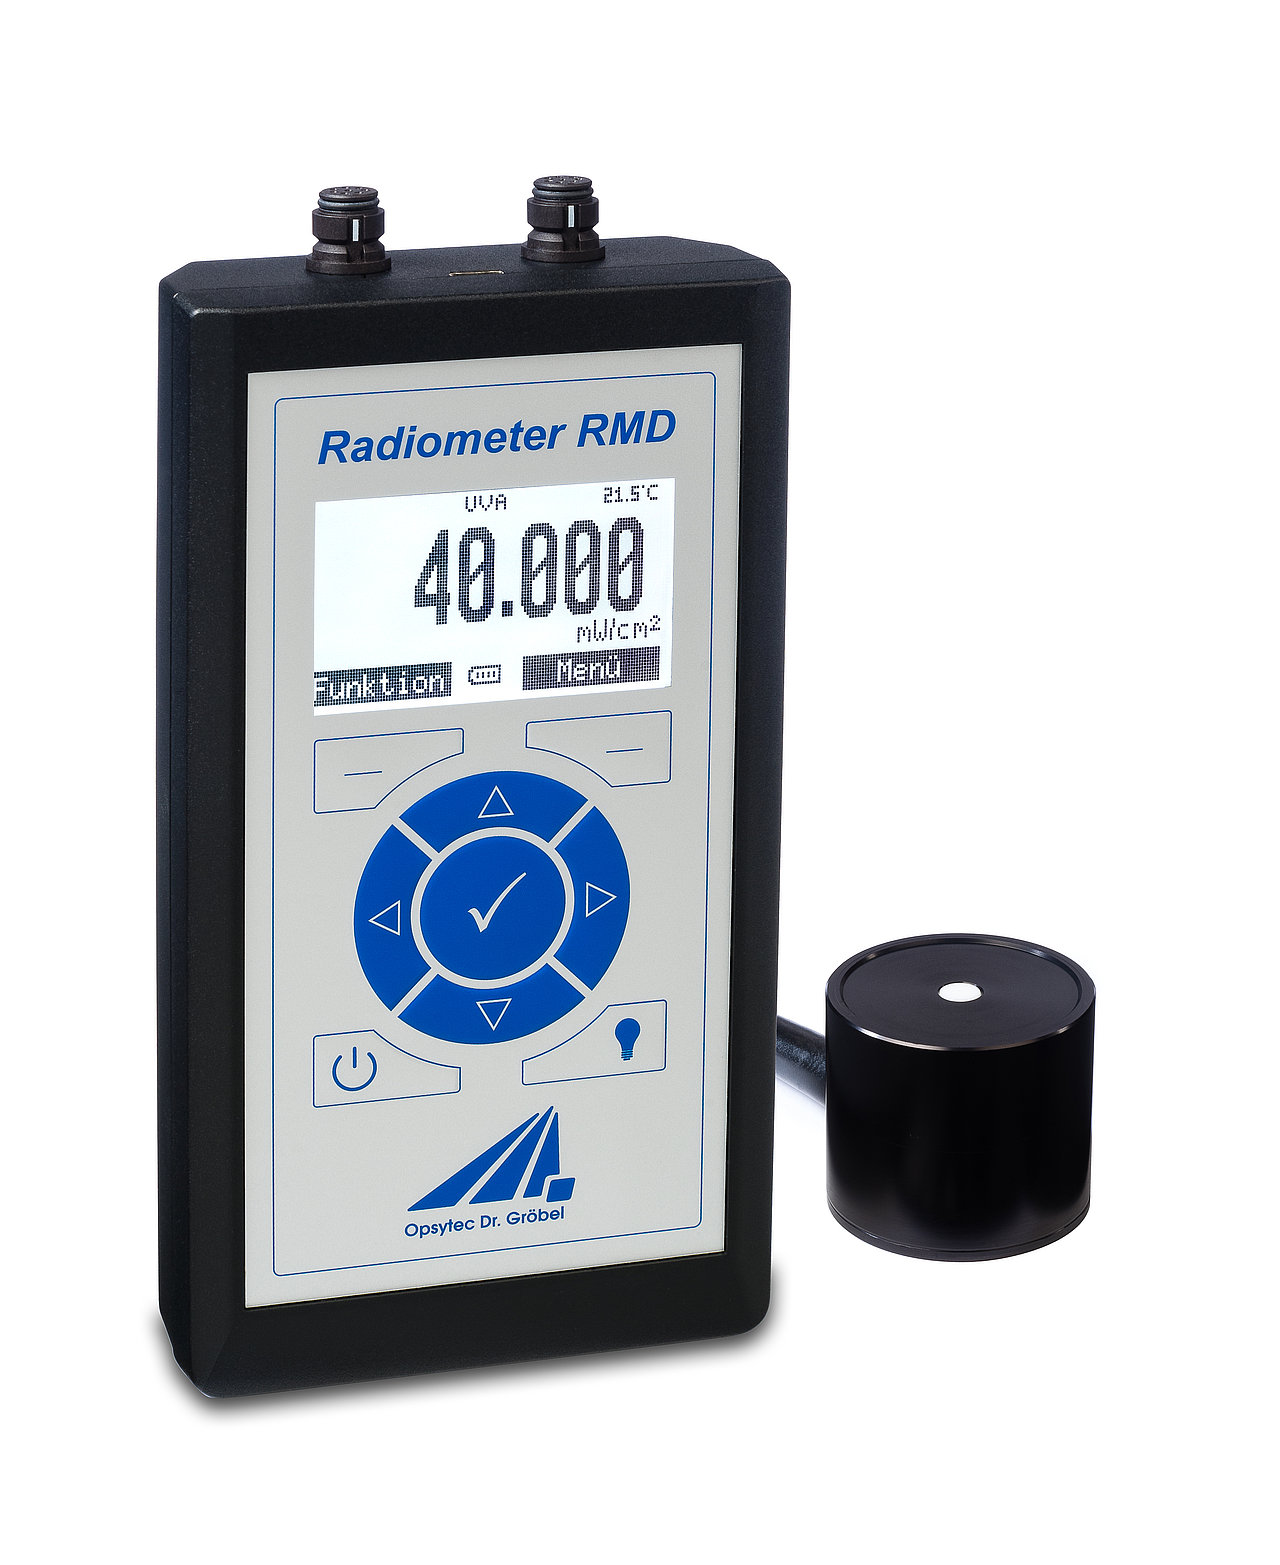 Digitales Radiometer RMD mit einem Sensor